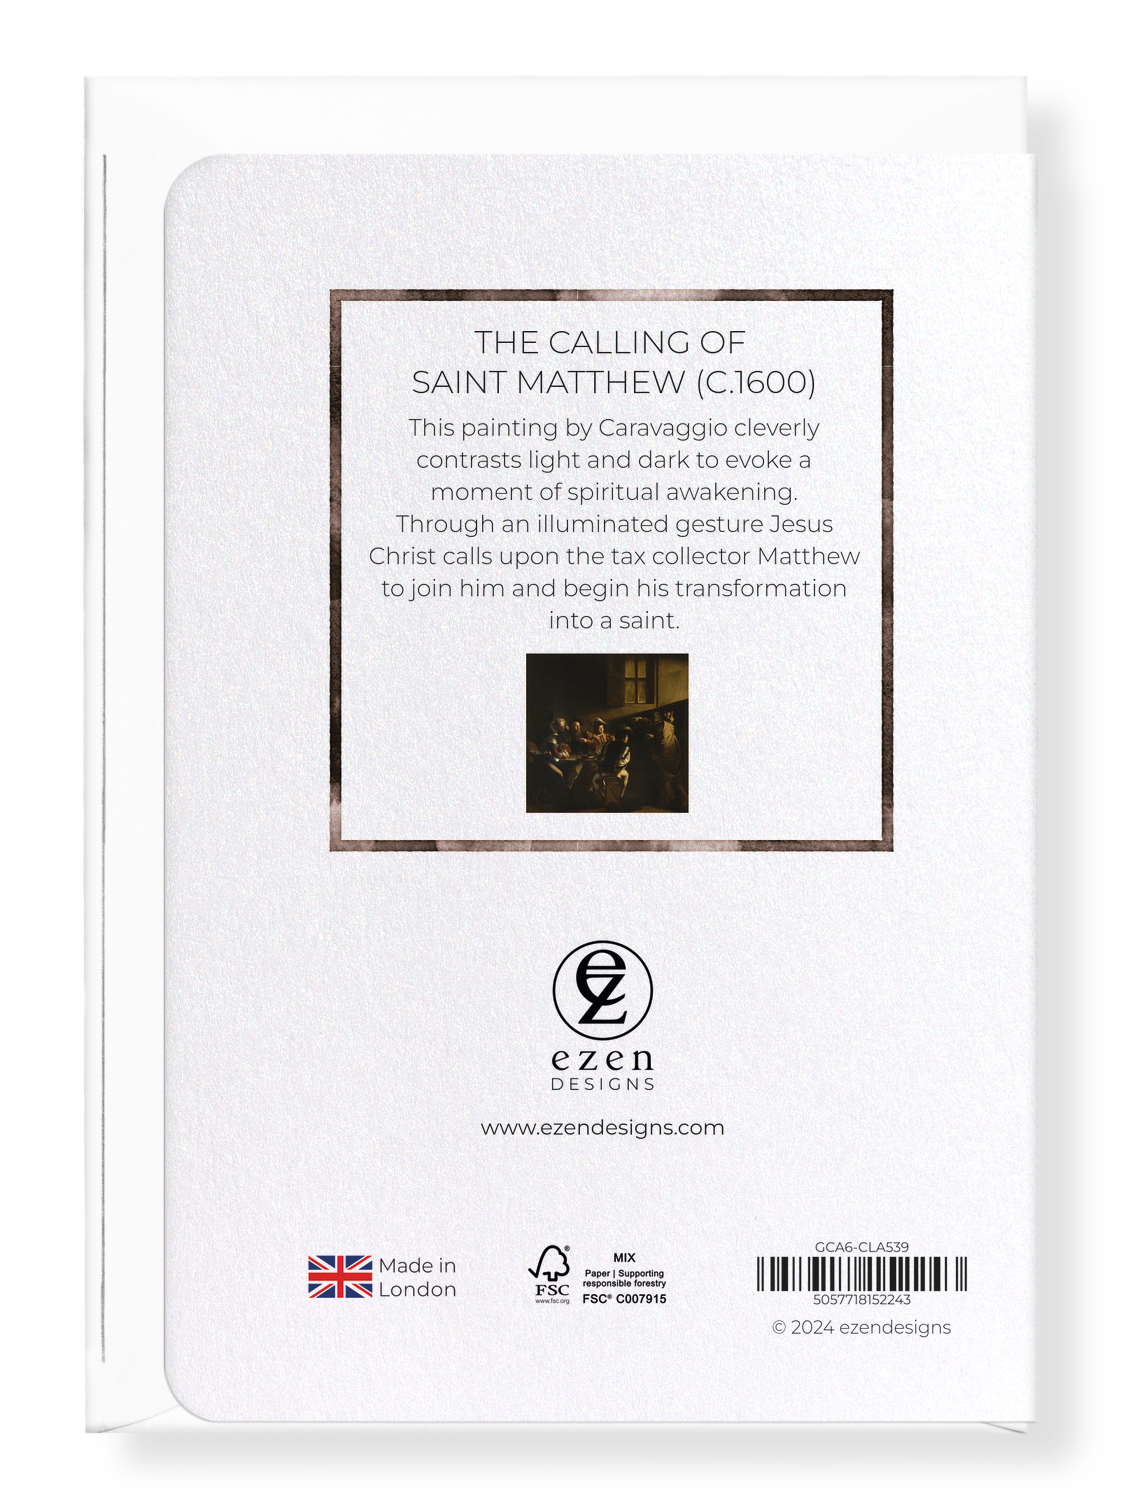 Ezen Designs - The Calling of Saint Matthew (c.1600) - Greeting Card - Back